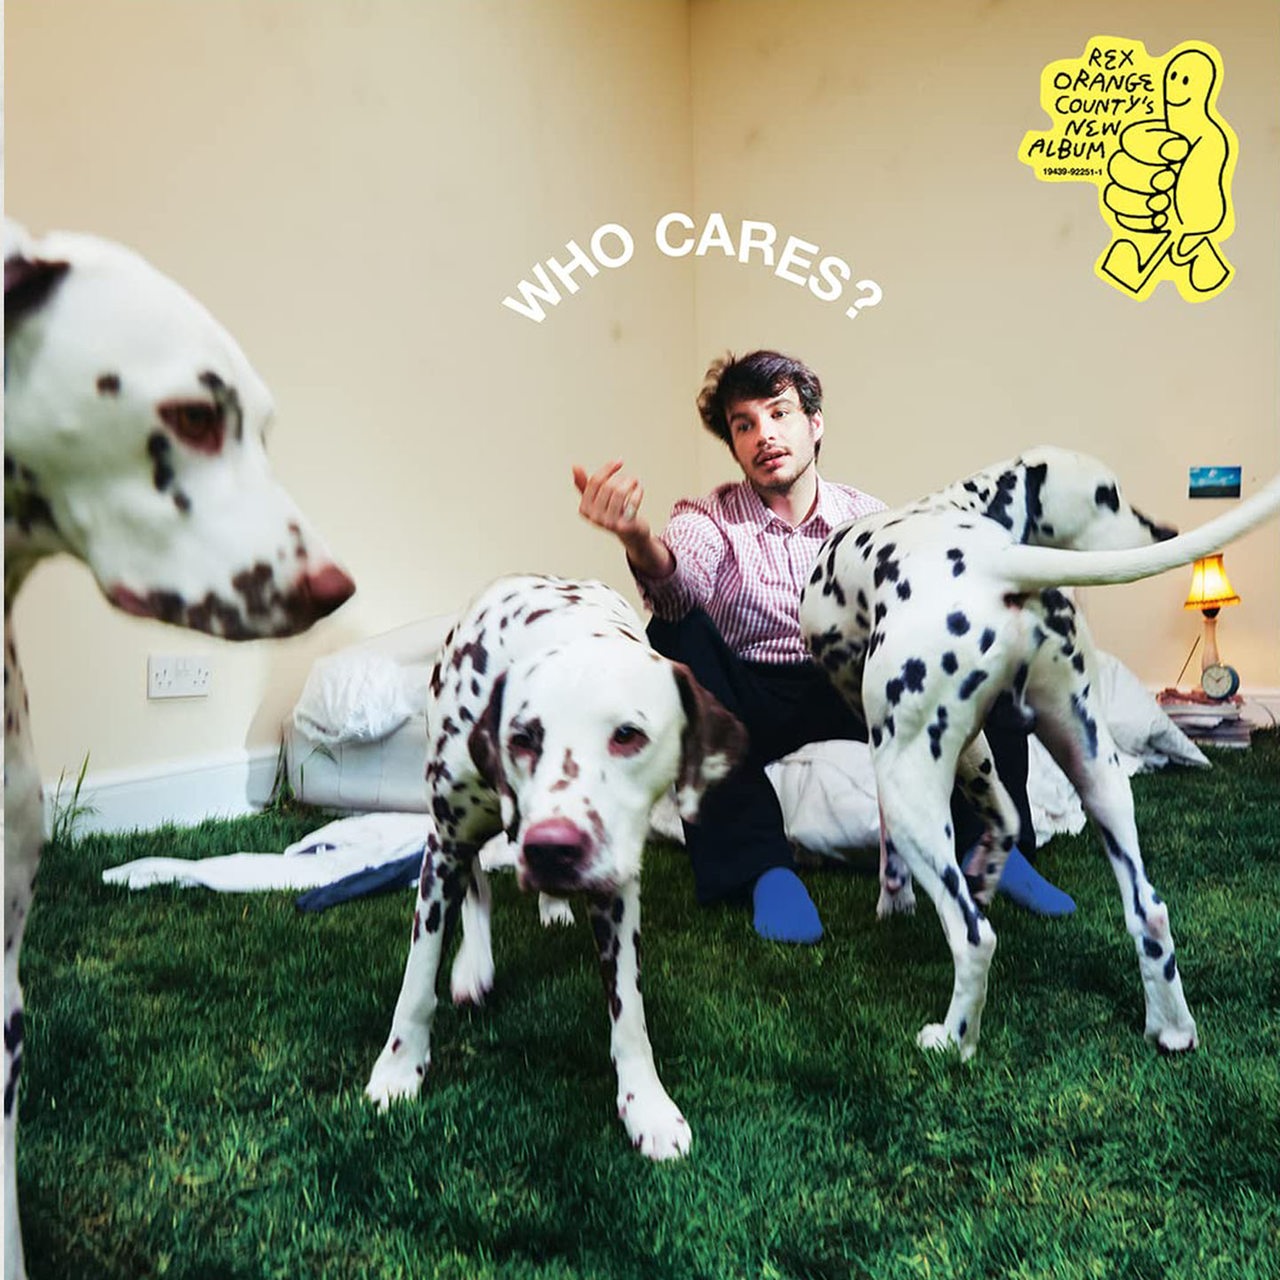 Albumcover von Rex Orange County "Who cares?"